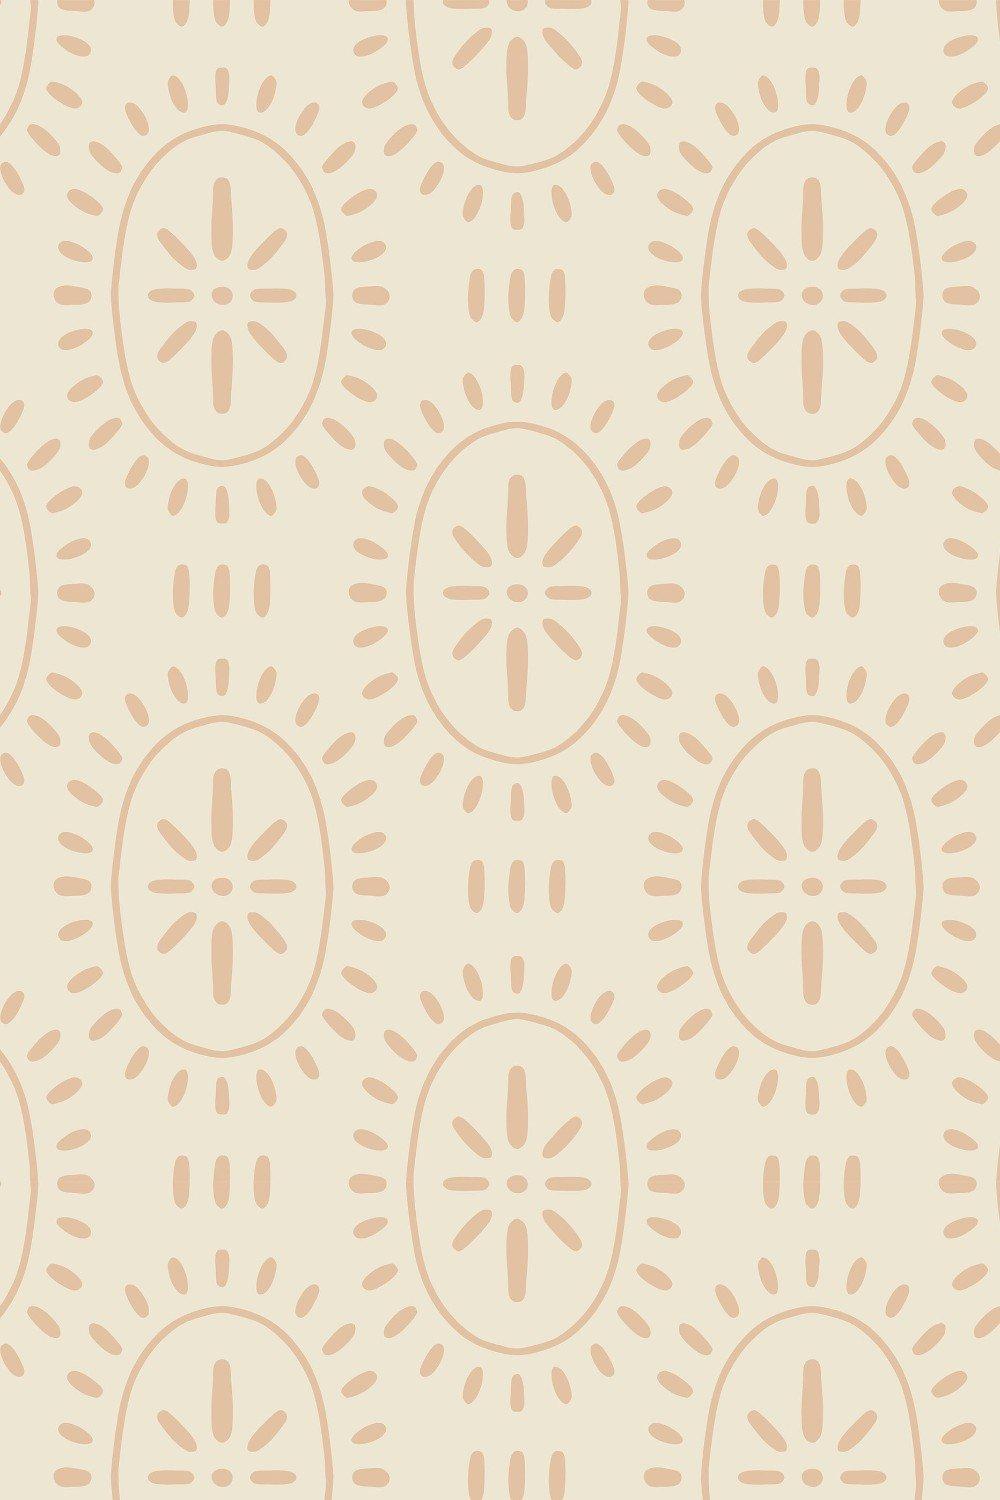 Eco-Friendly Sun Motif Pattern Wallpaper